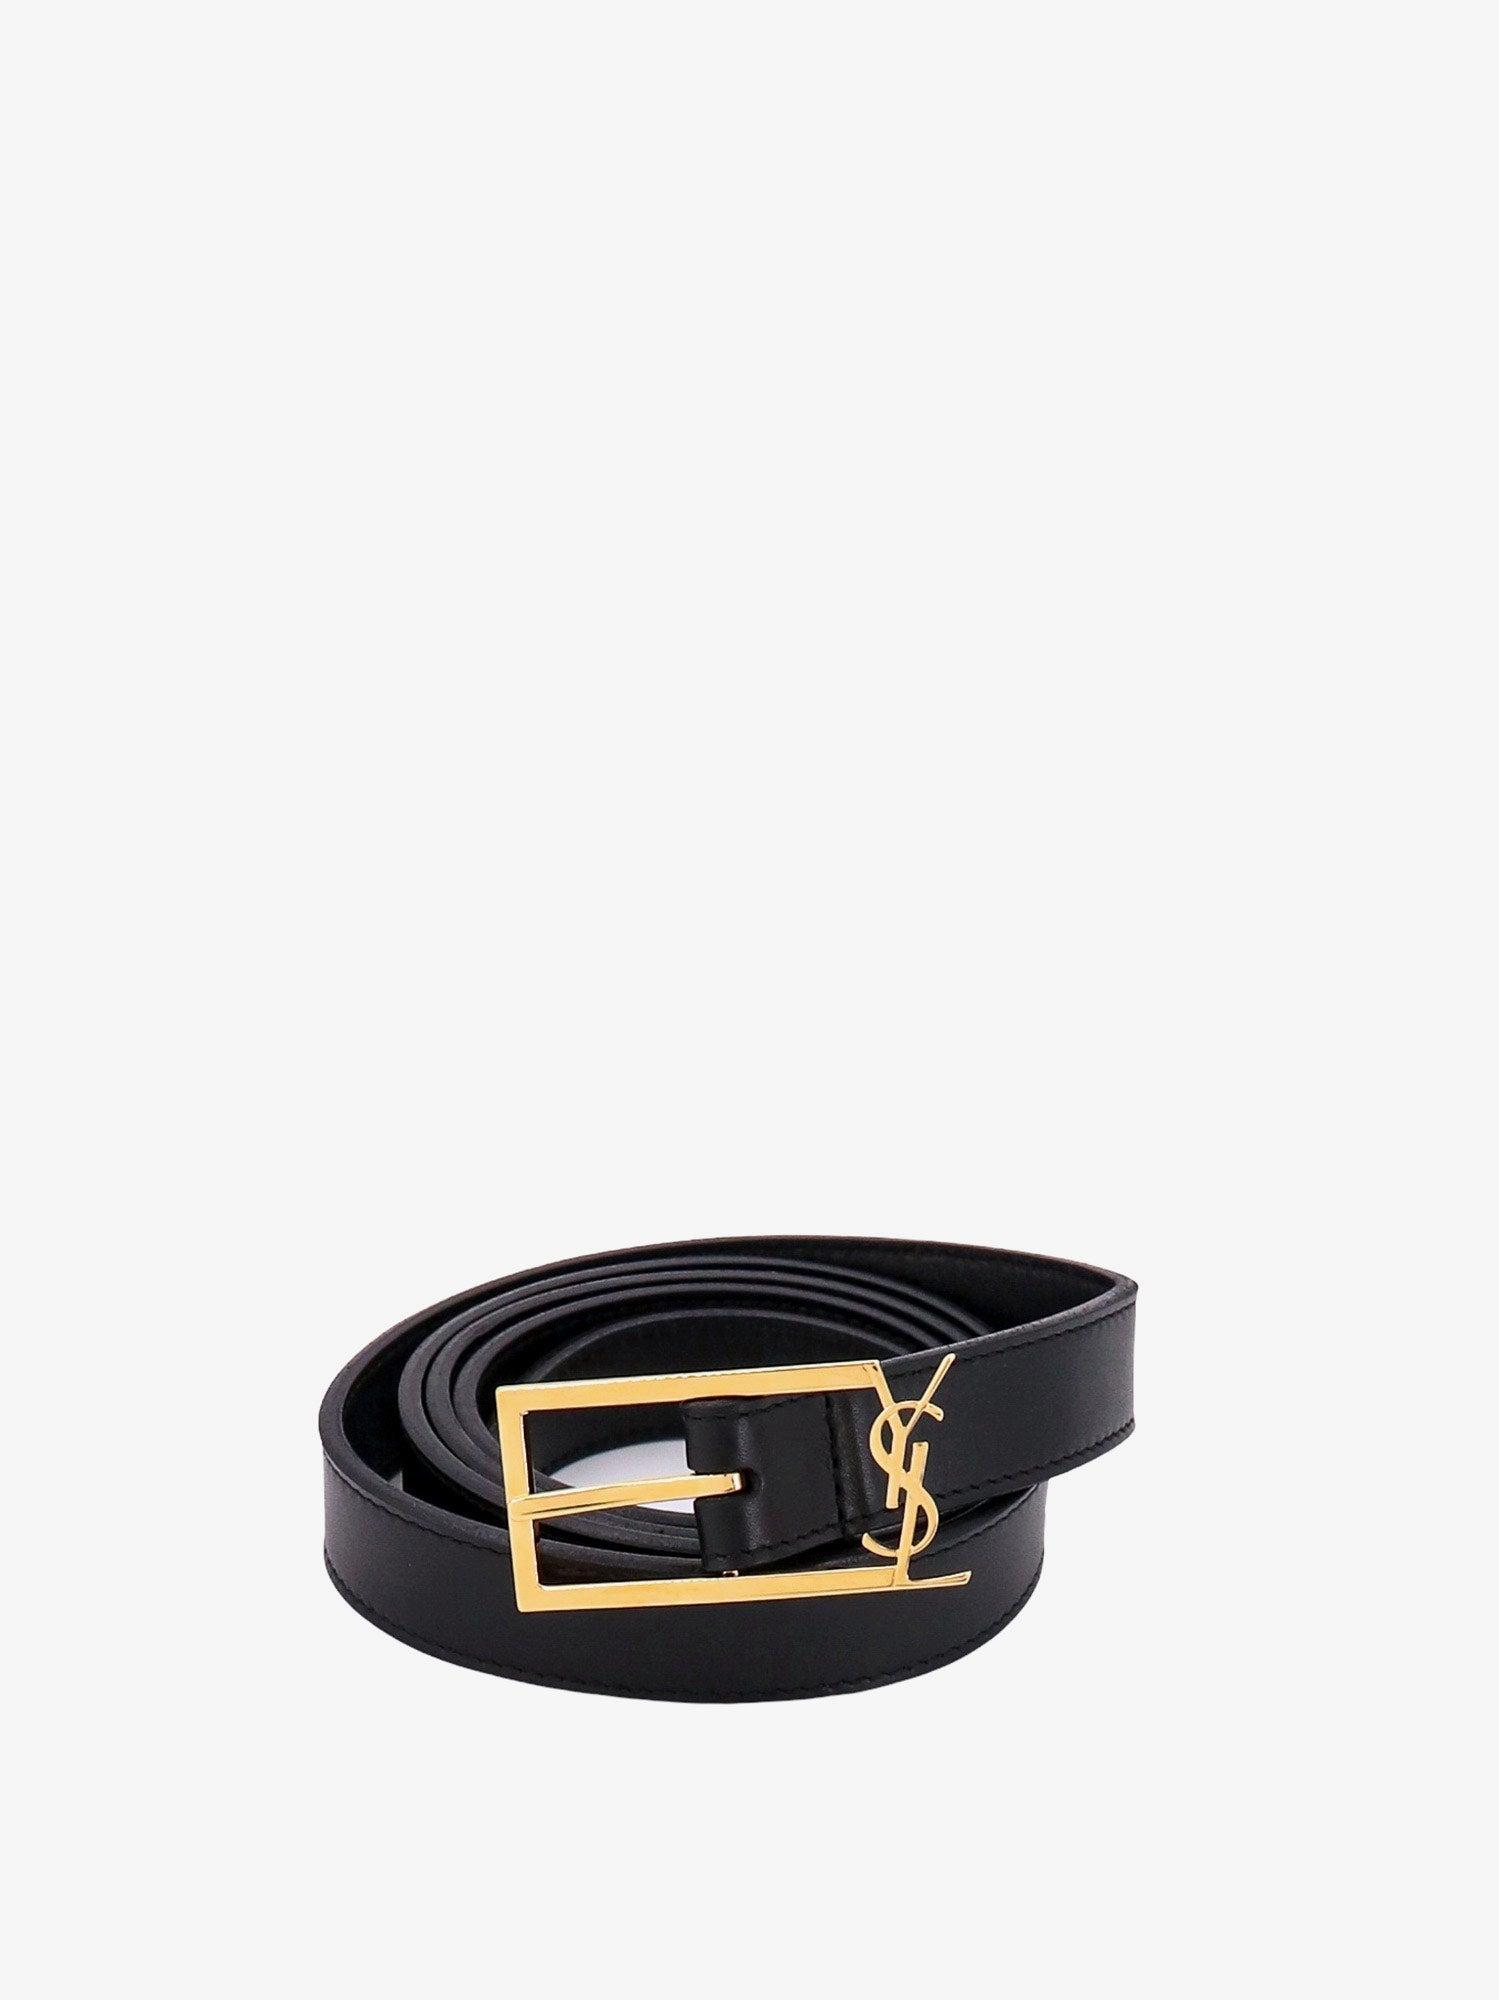 Saint Laurent Leather Belts in Black for Men | Lyst